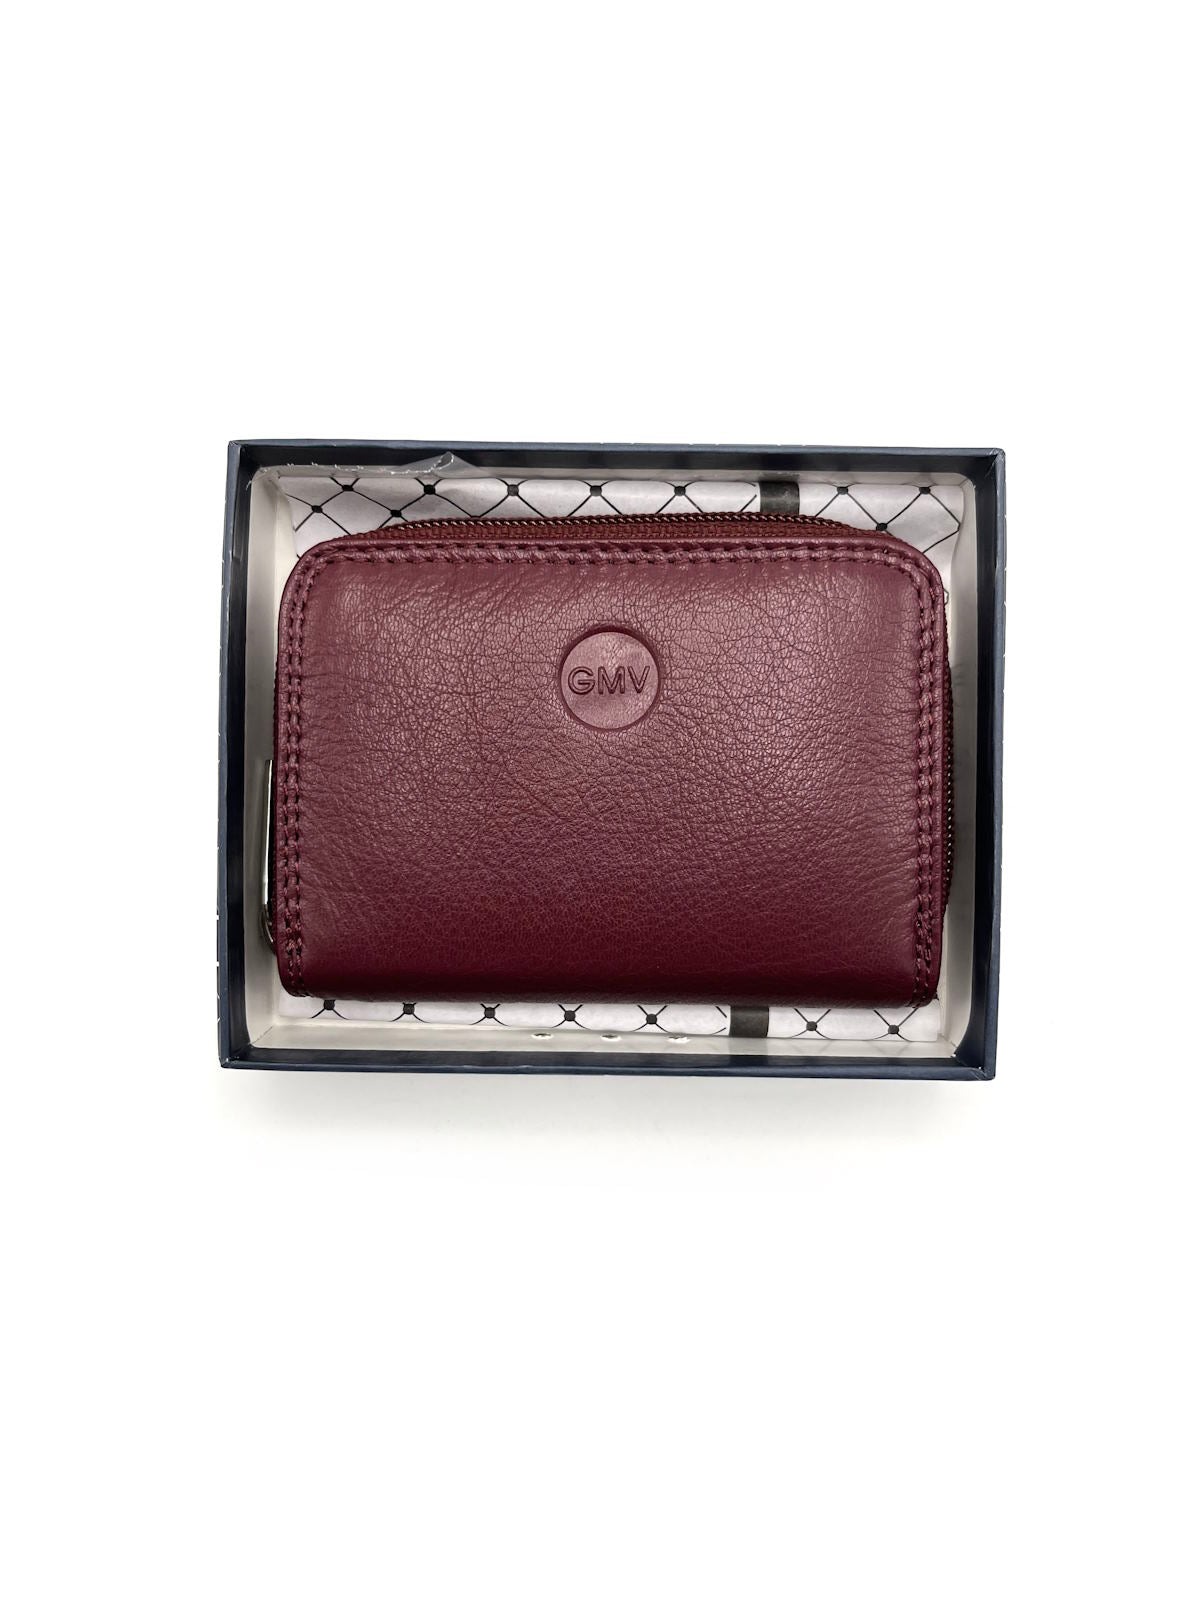 Genuine leather card holder, Brand GMV, art. GMV80-3921